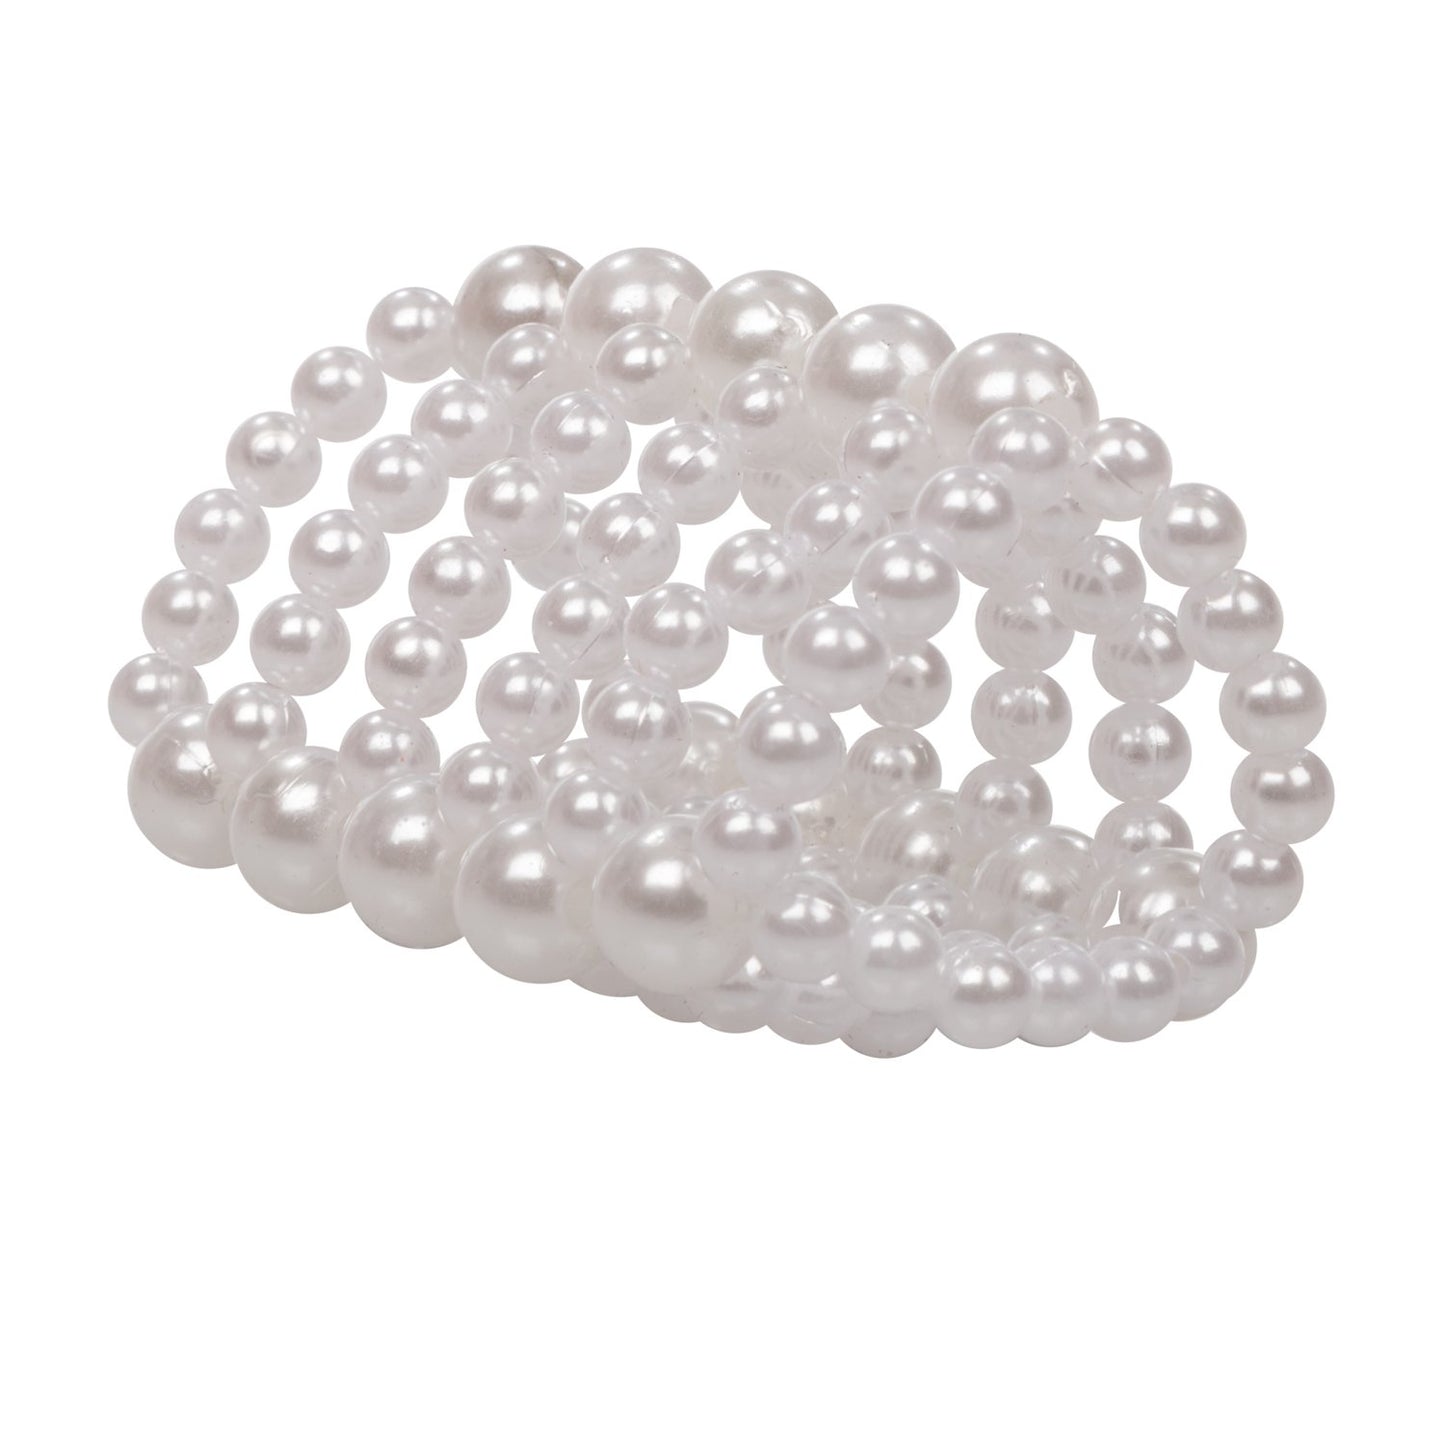 Basic Essentials Pearl Stroker Beads - 2.75